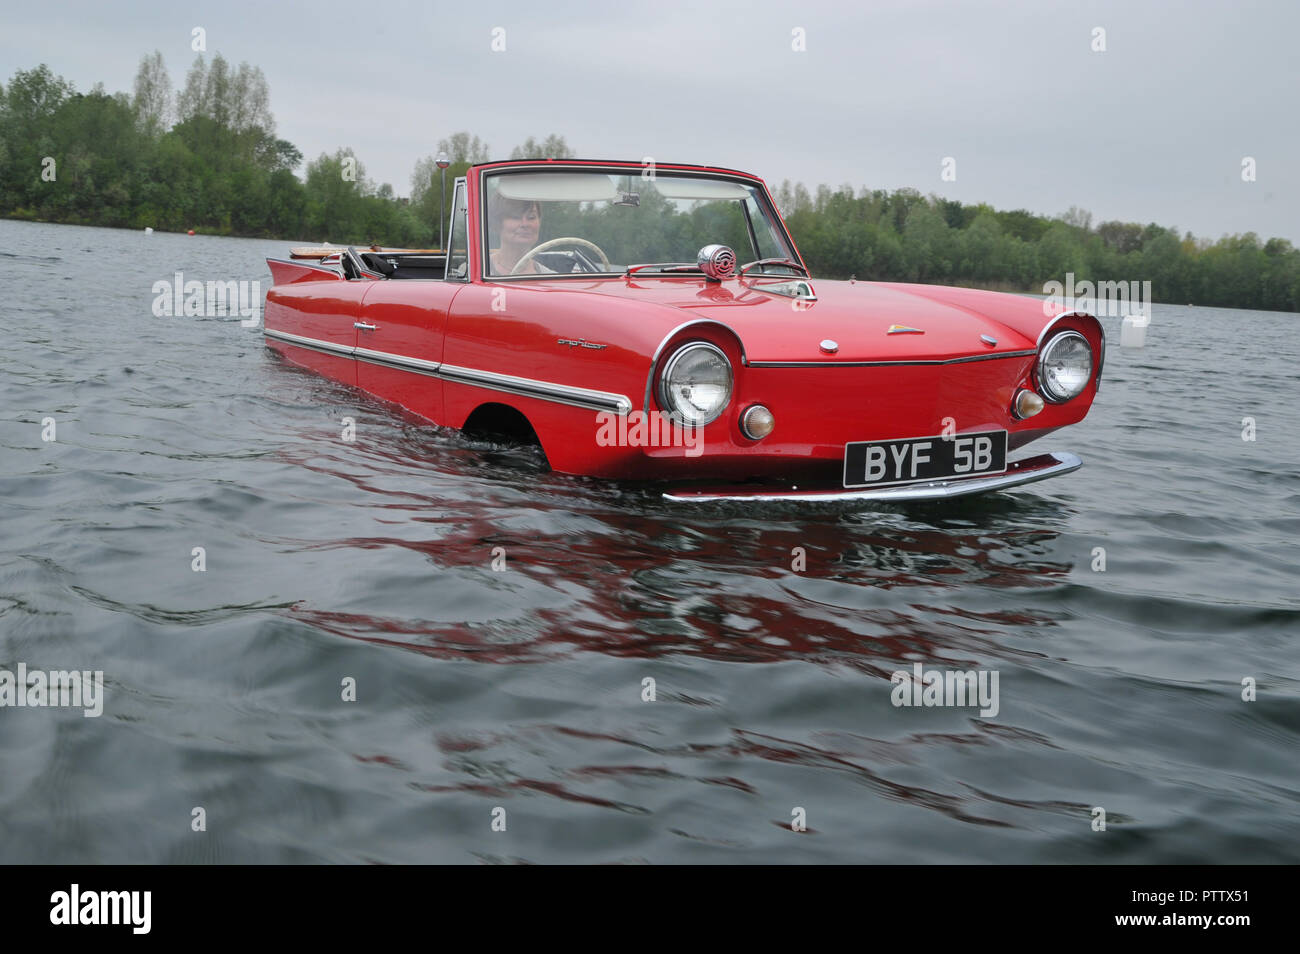 Amphicar - 1960s British amphibious car on land and water Stock Photo